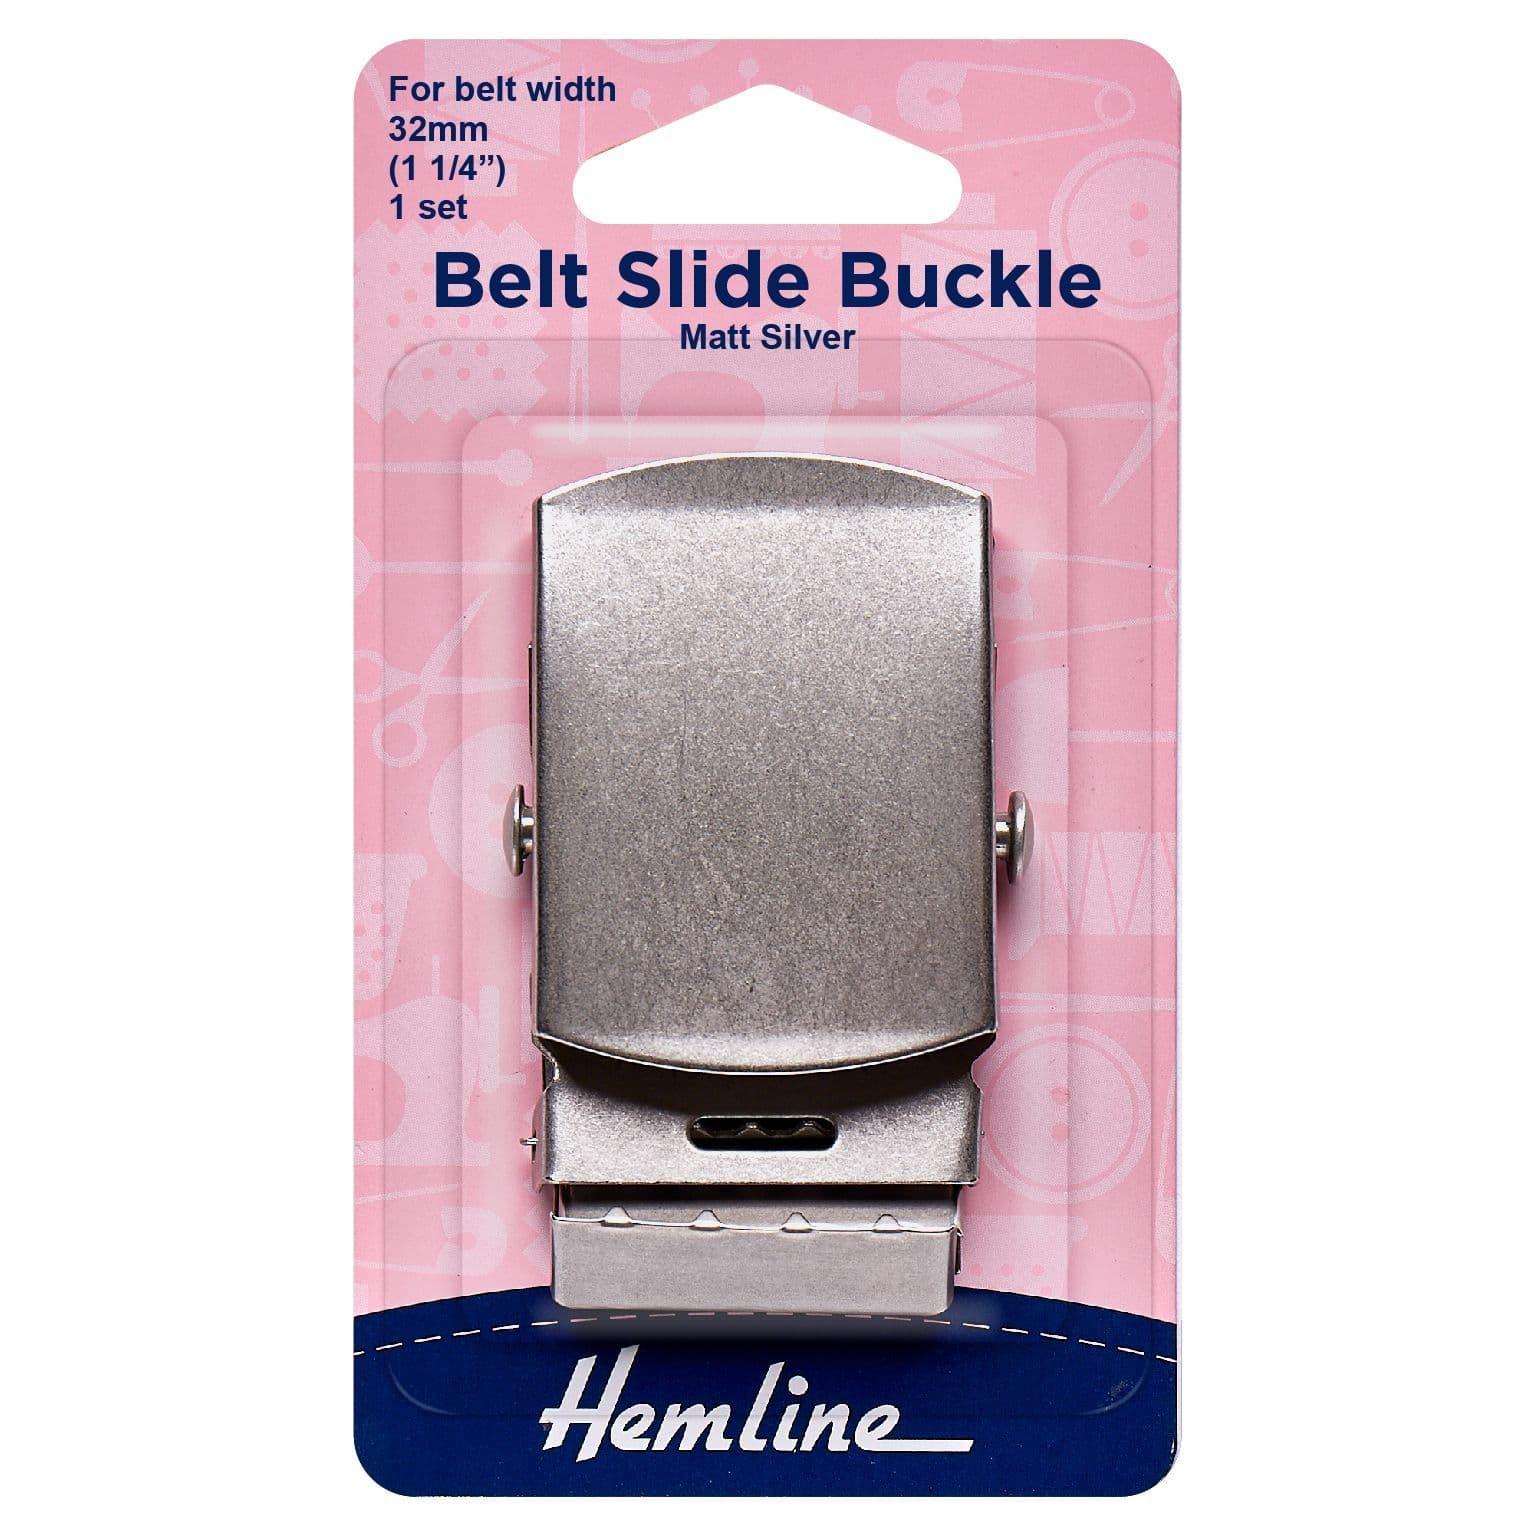 Hemline Belt Slide Buckle 32mm Matt Silver - 1 pc